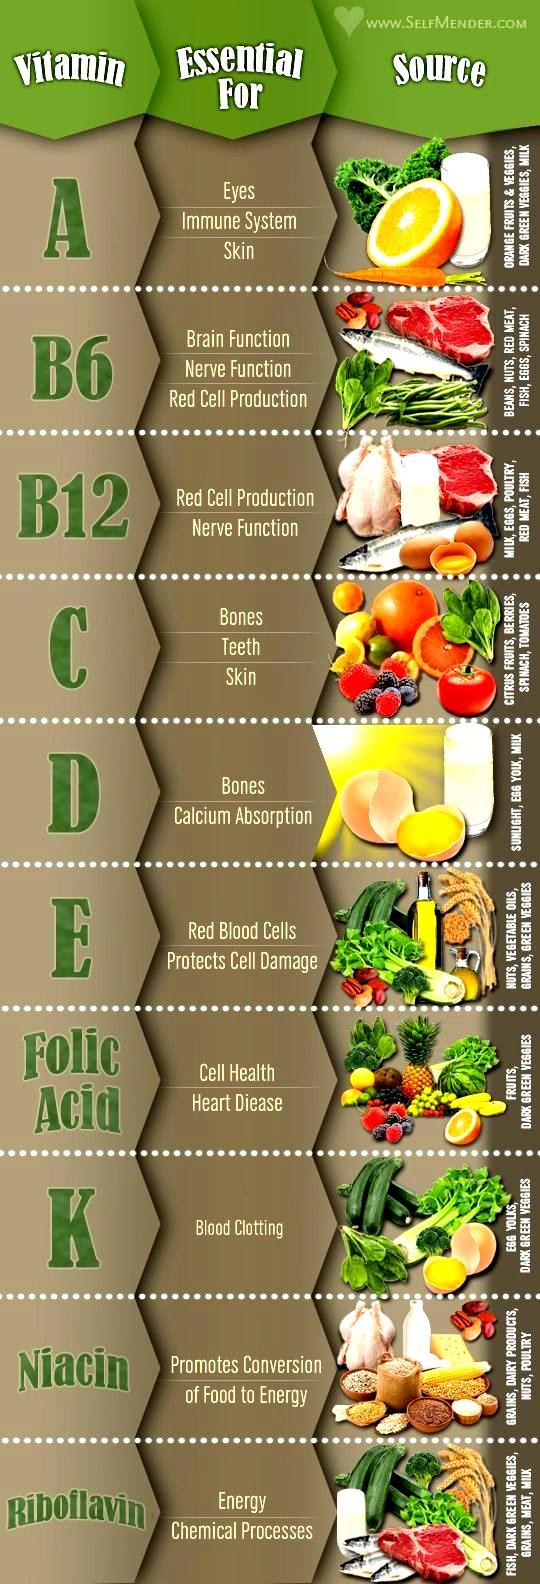 Vitamin A Milk, Dark Green Veggies, Citrus fruits B6 Beans, Nuts, Red Meat, Fish, Eggs, Spinach B12 Milk, Eggs,